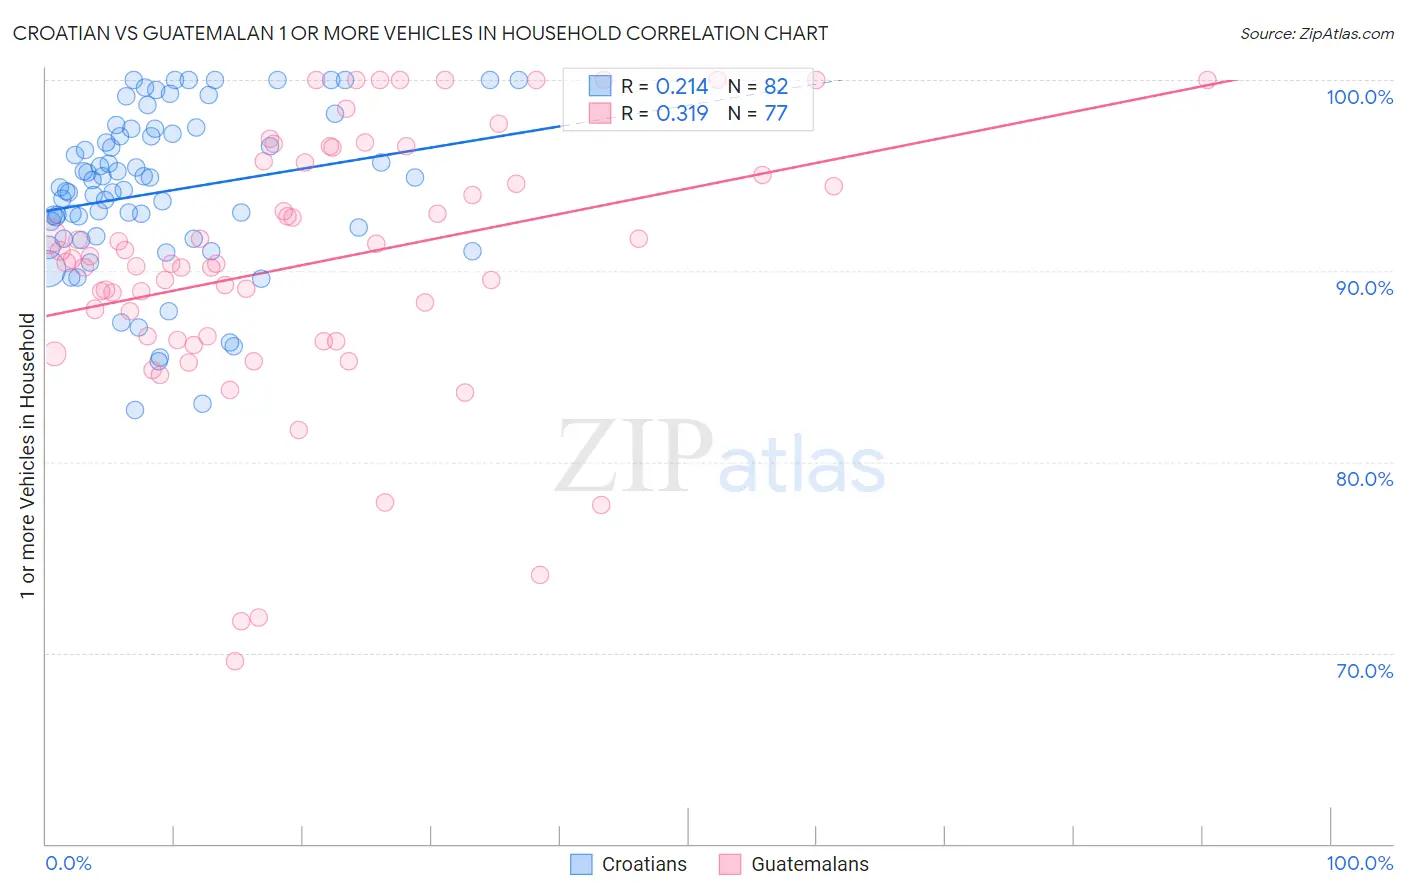 Croatian vs Guatemalan 1 or more Vehicles in Household